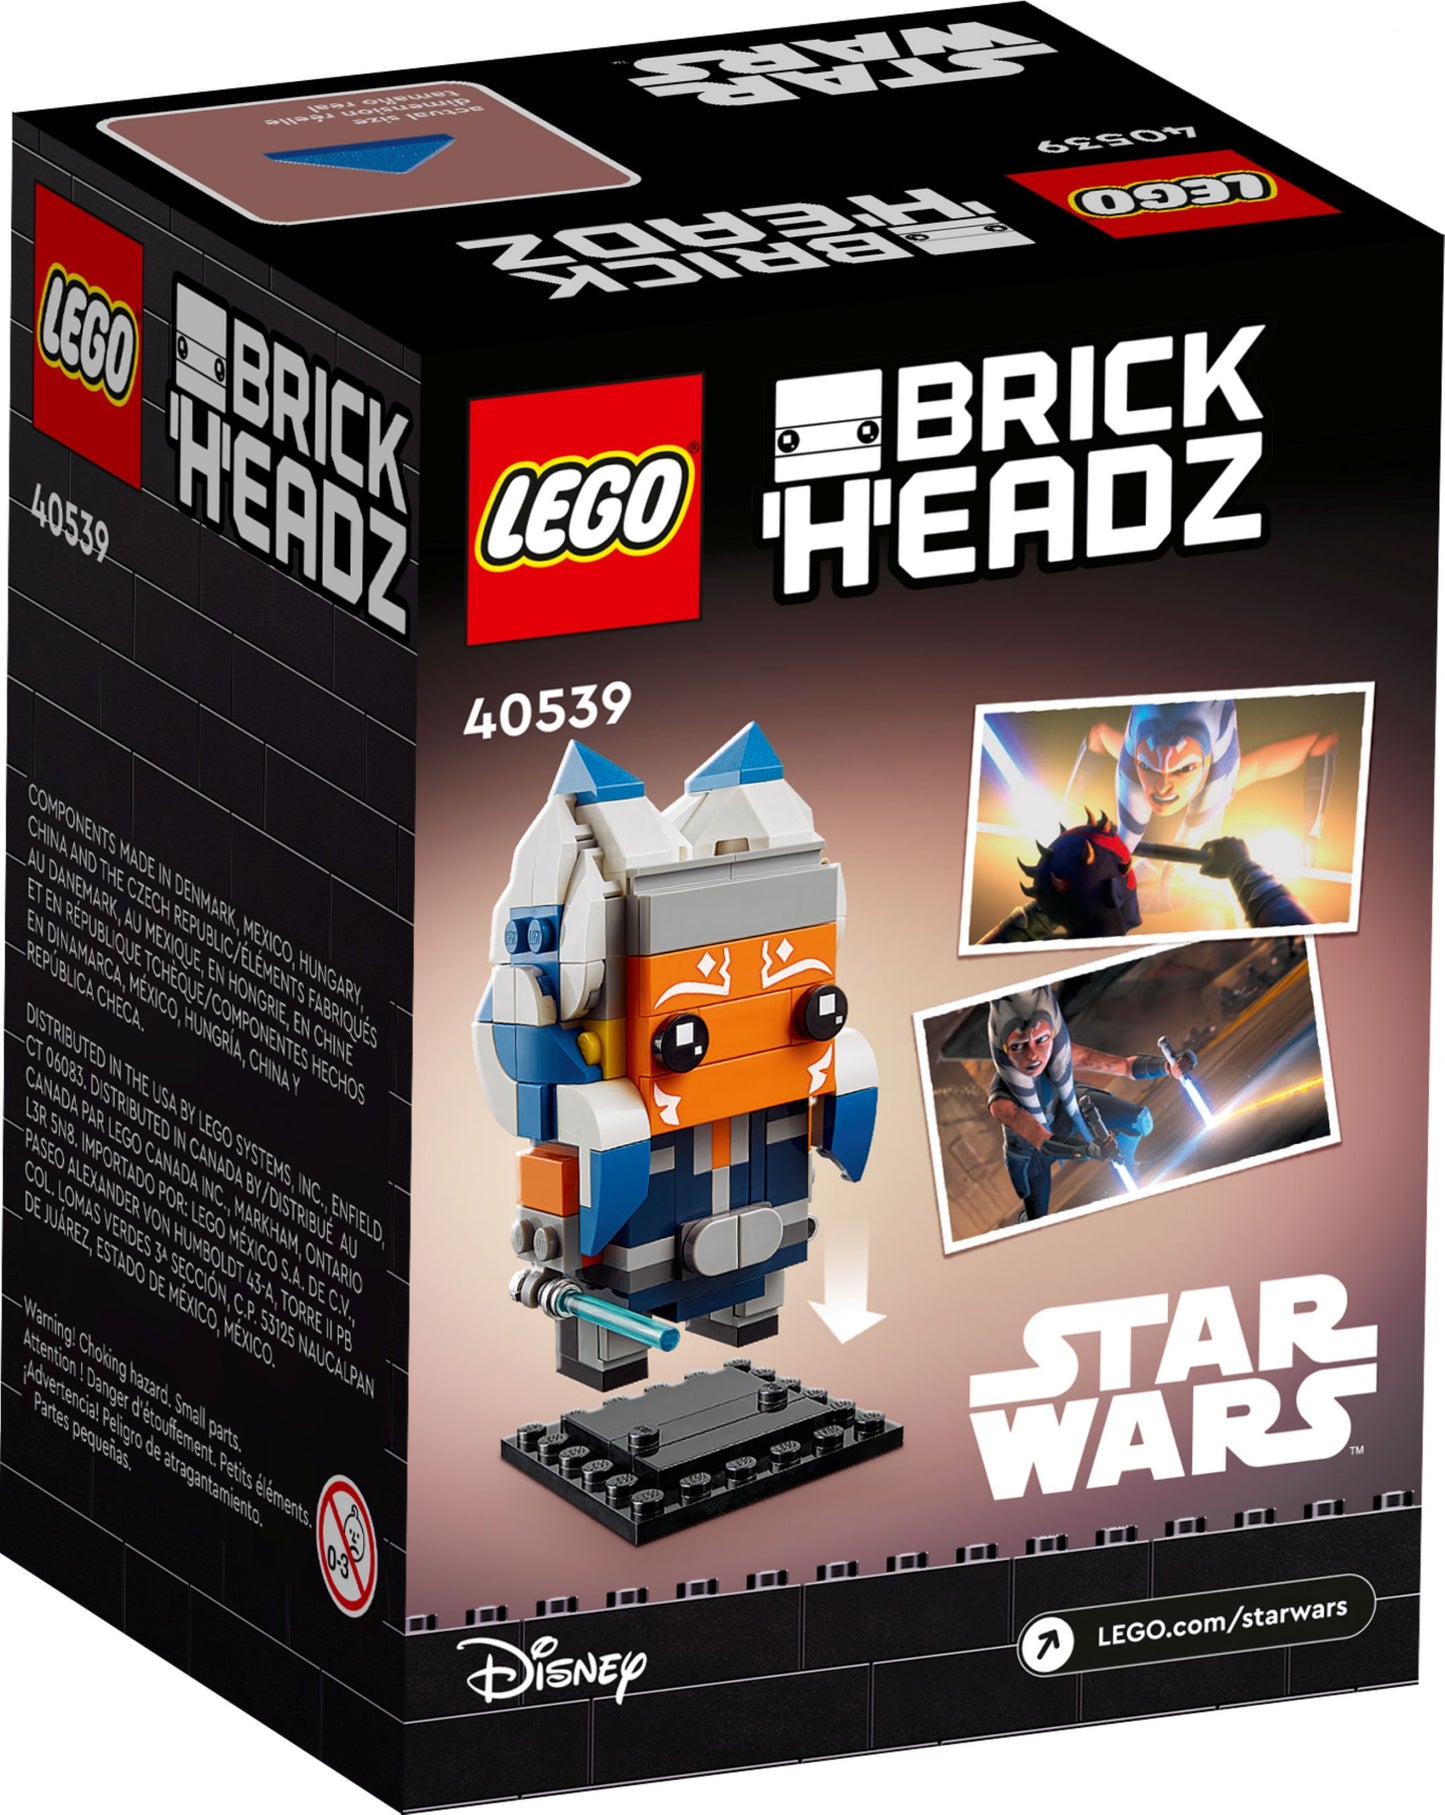 LEGO® BrickHeadz 40539 Ahsoka Tano™ - 164 Teile